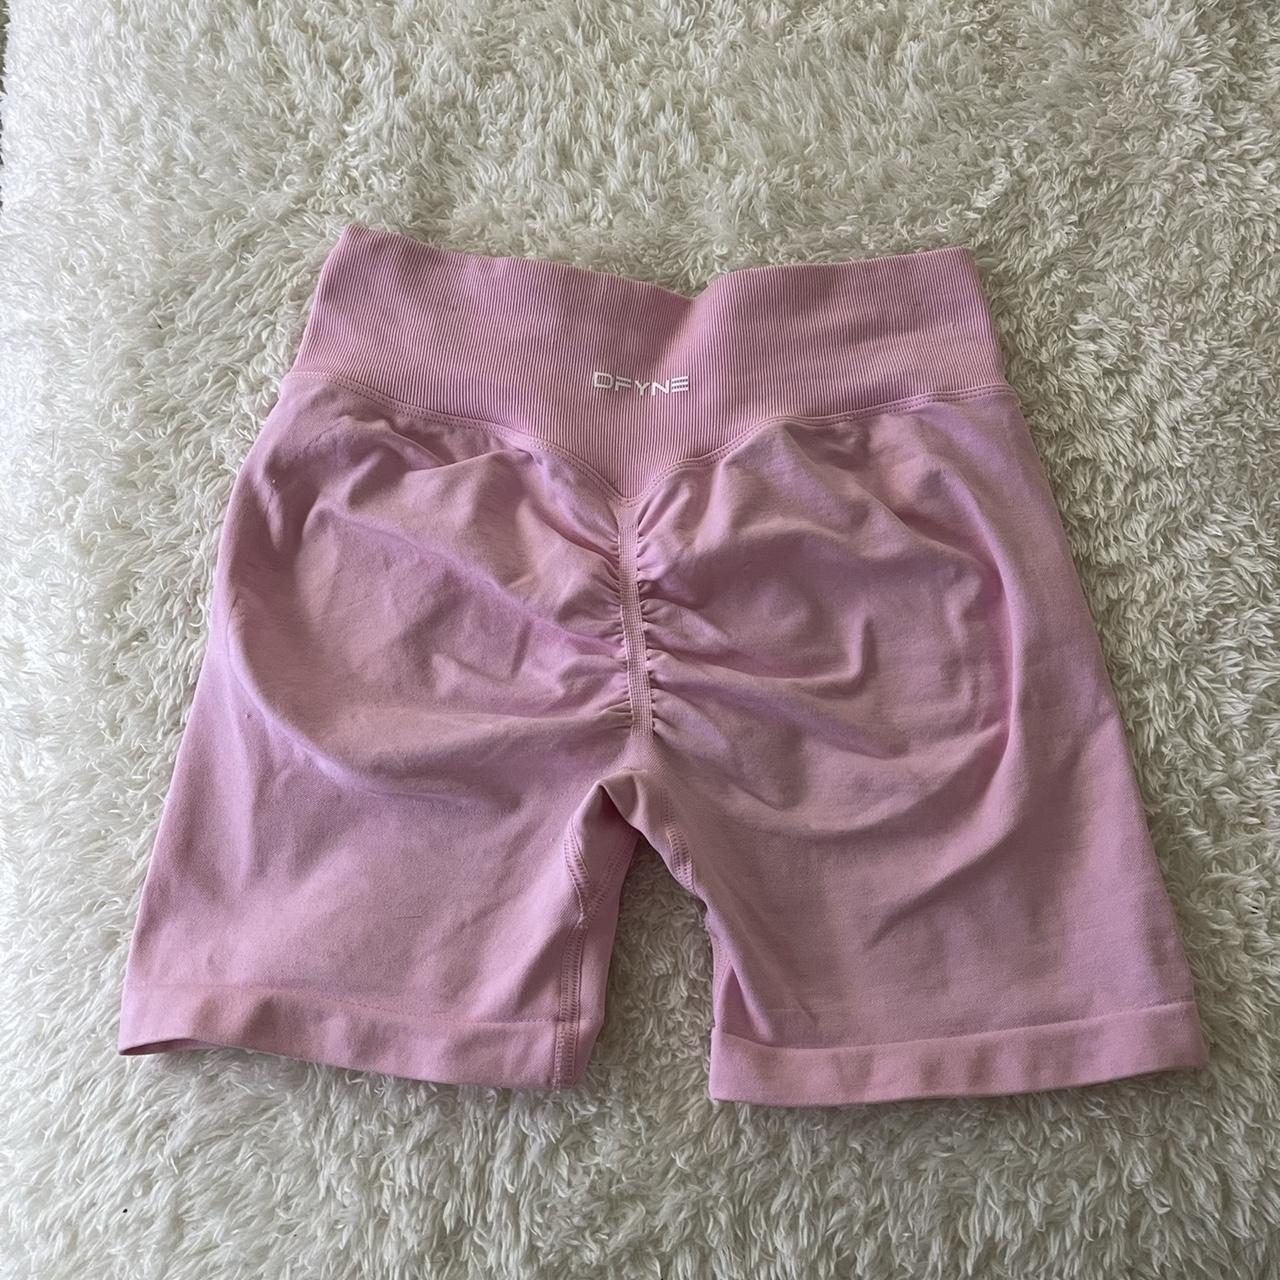 dfyne dynamic shorts | 4.5 in shade: light rose pink... - Depop